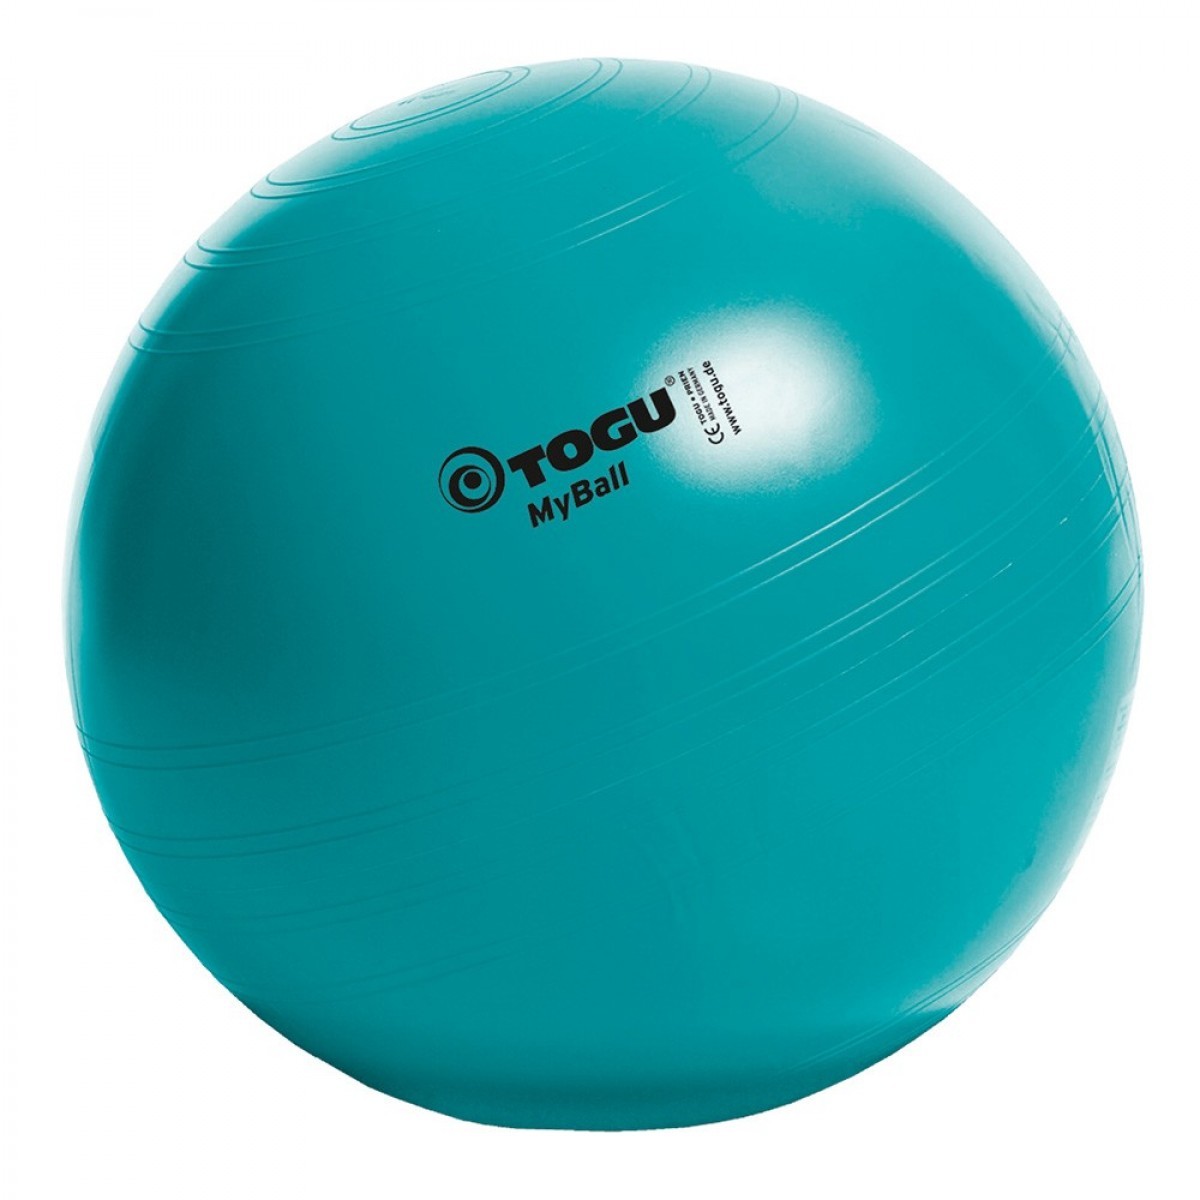 Мячи для занятий лечебной физкультурой Мяч Myball для занятий лечебной физкультурой togu_myball_55_02.jpg